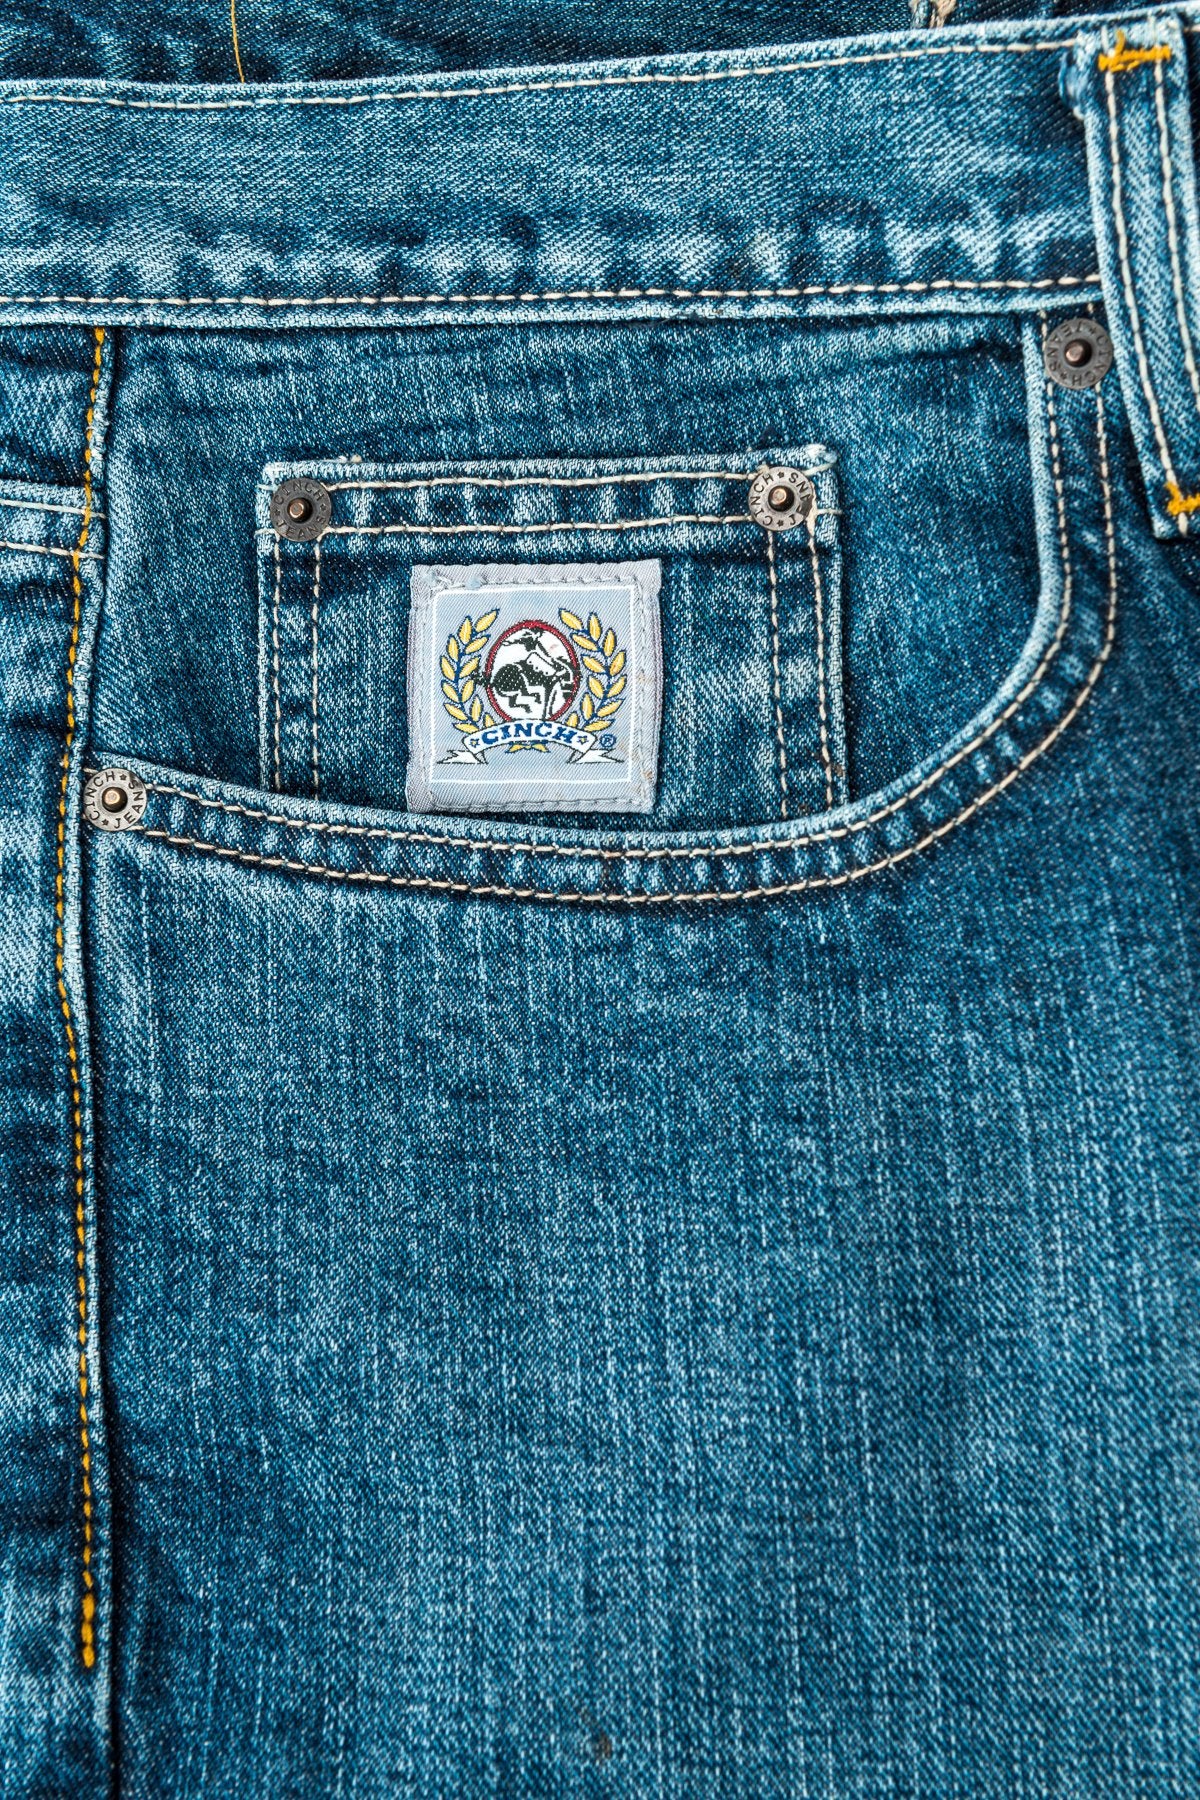 Cinch Men's Slim Fit Silver Label Jeans, Medium Stone Wash Jeans